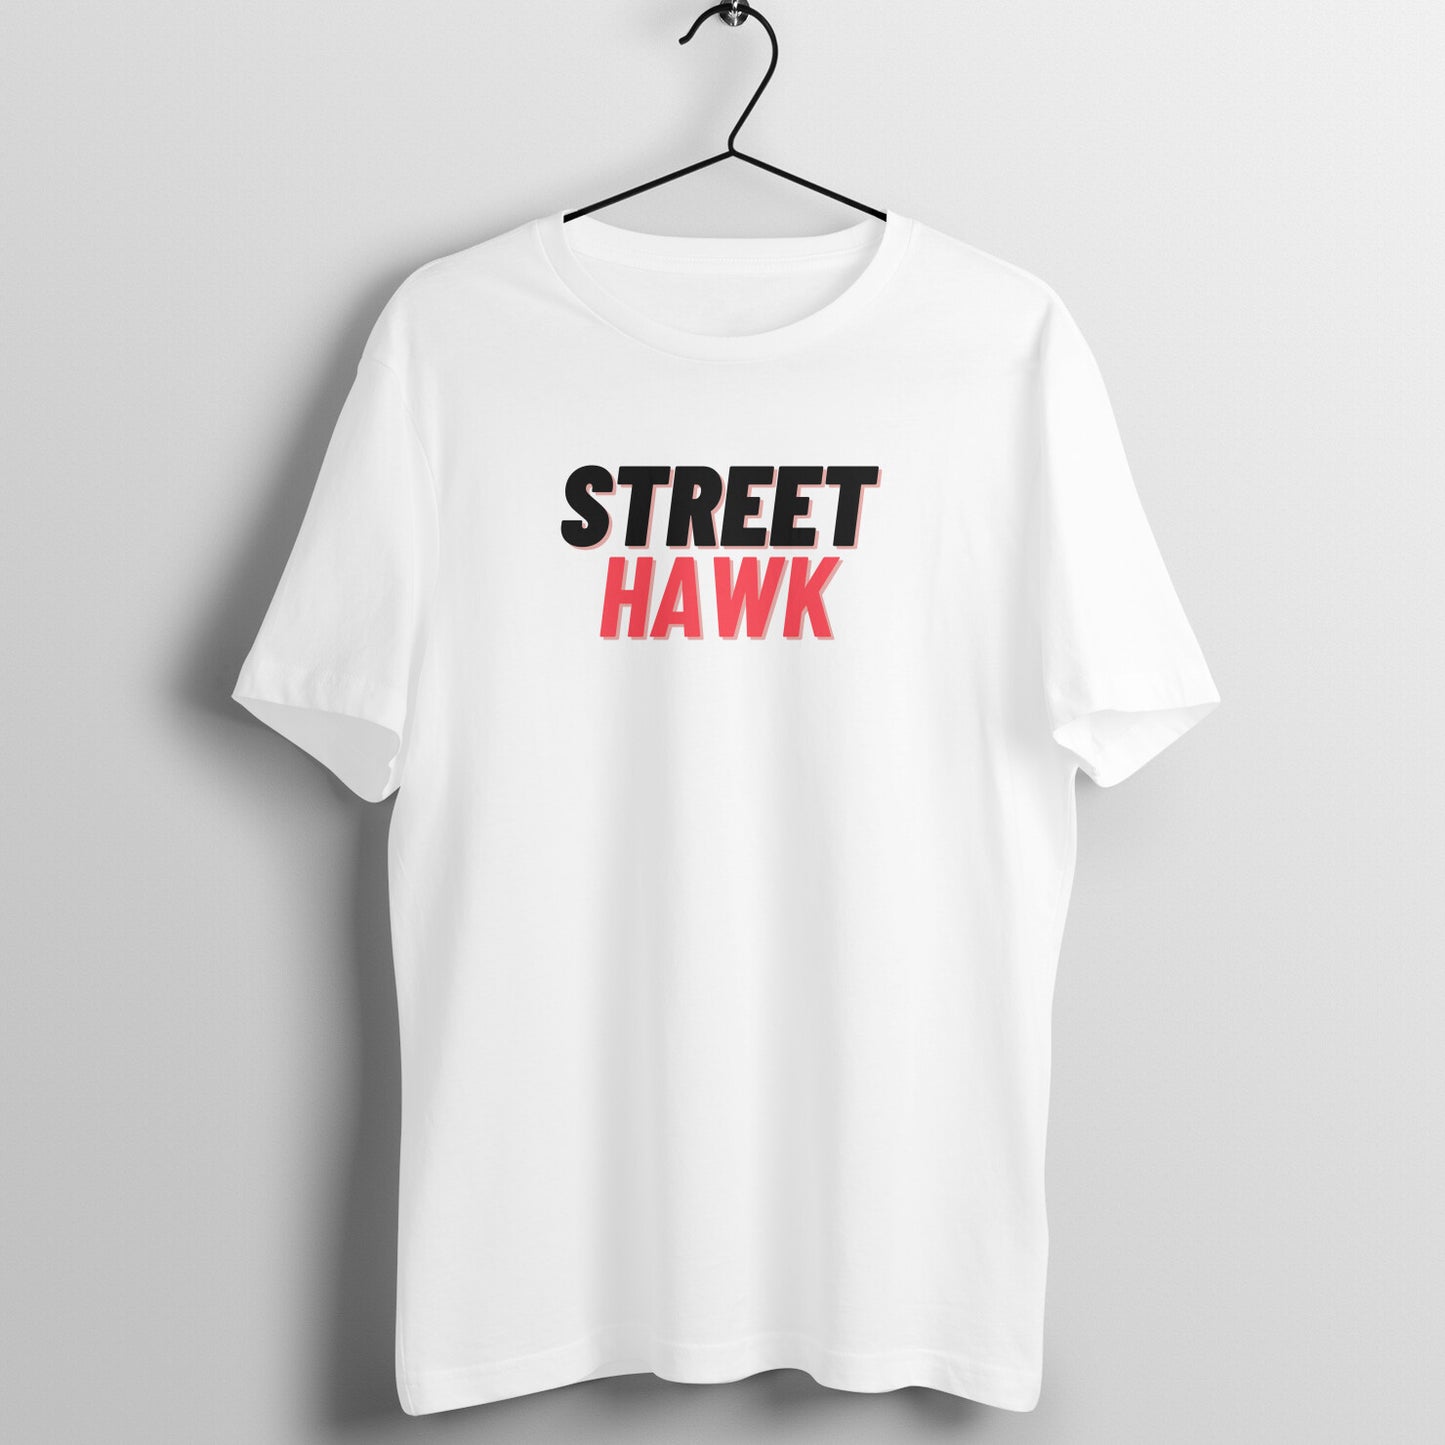 Bilkool Street Hawk Cotton Half Sleeve T-Shirt